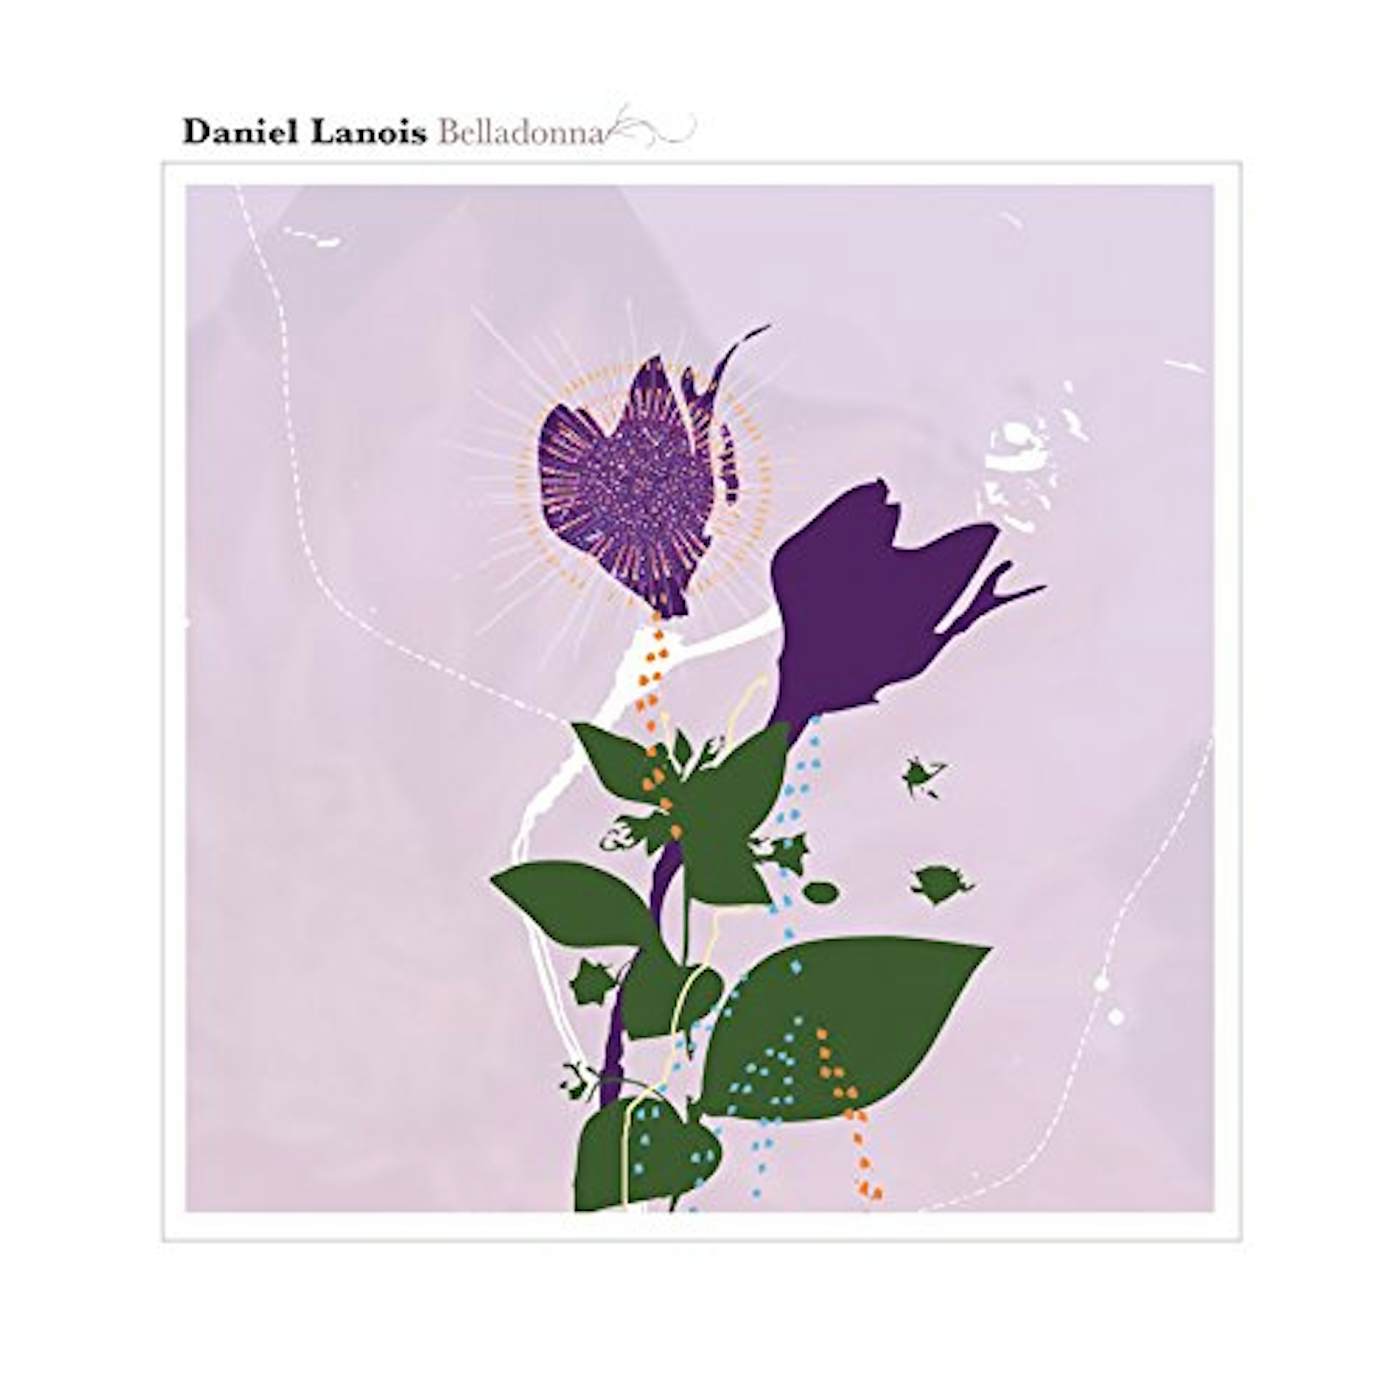 Daniel Lanois Belladonna Vinyl Record